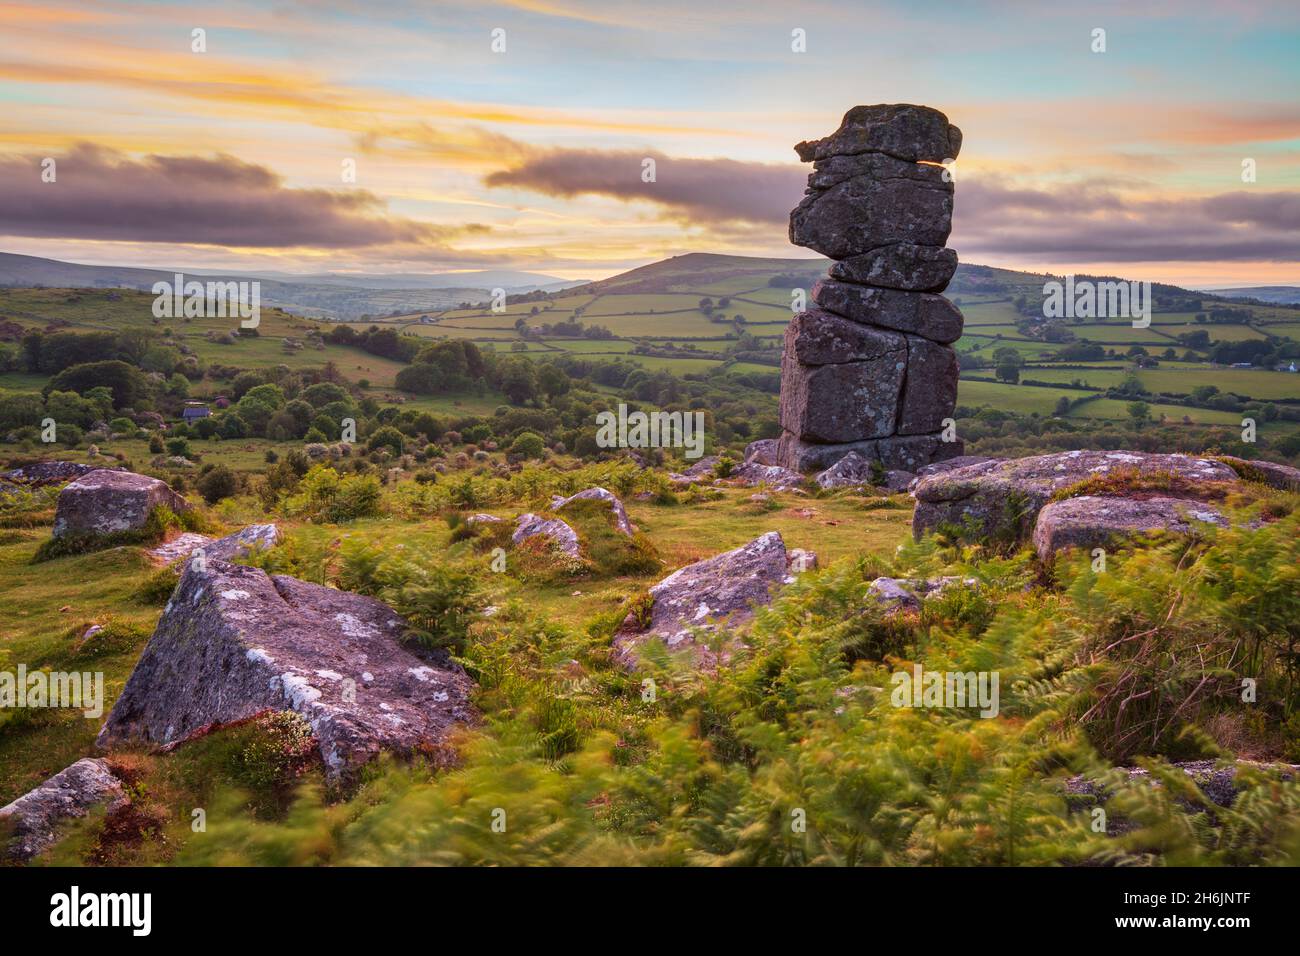 Bowerman's Nose rock formation at sunset, near Manaton, Dartmoor National Park, Devon, England, United Kingdom, Europe Stock Photo